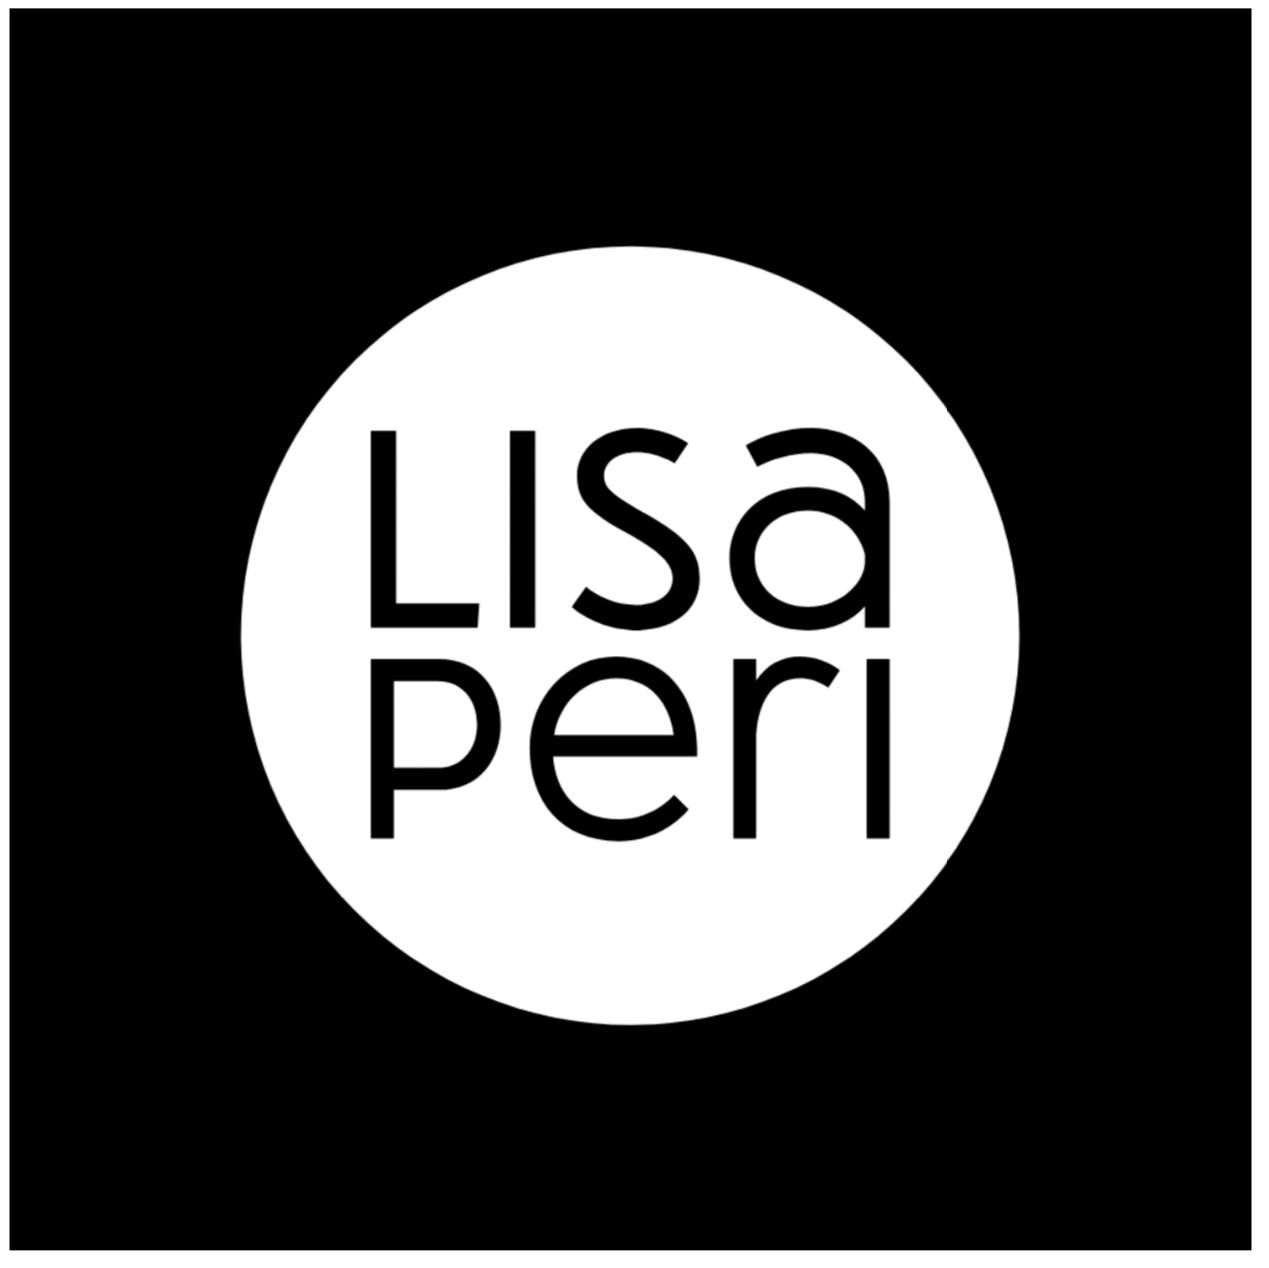 Lisa Peri Ceramics